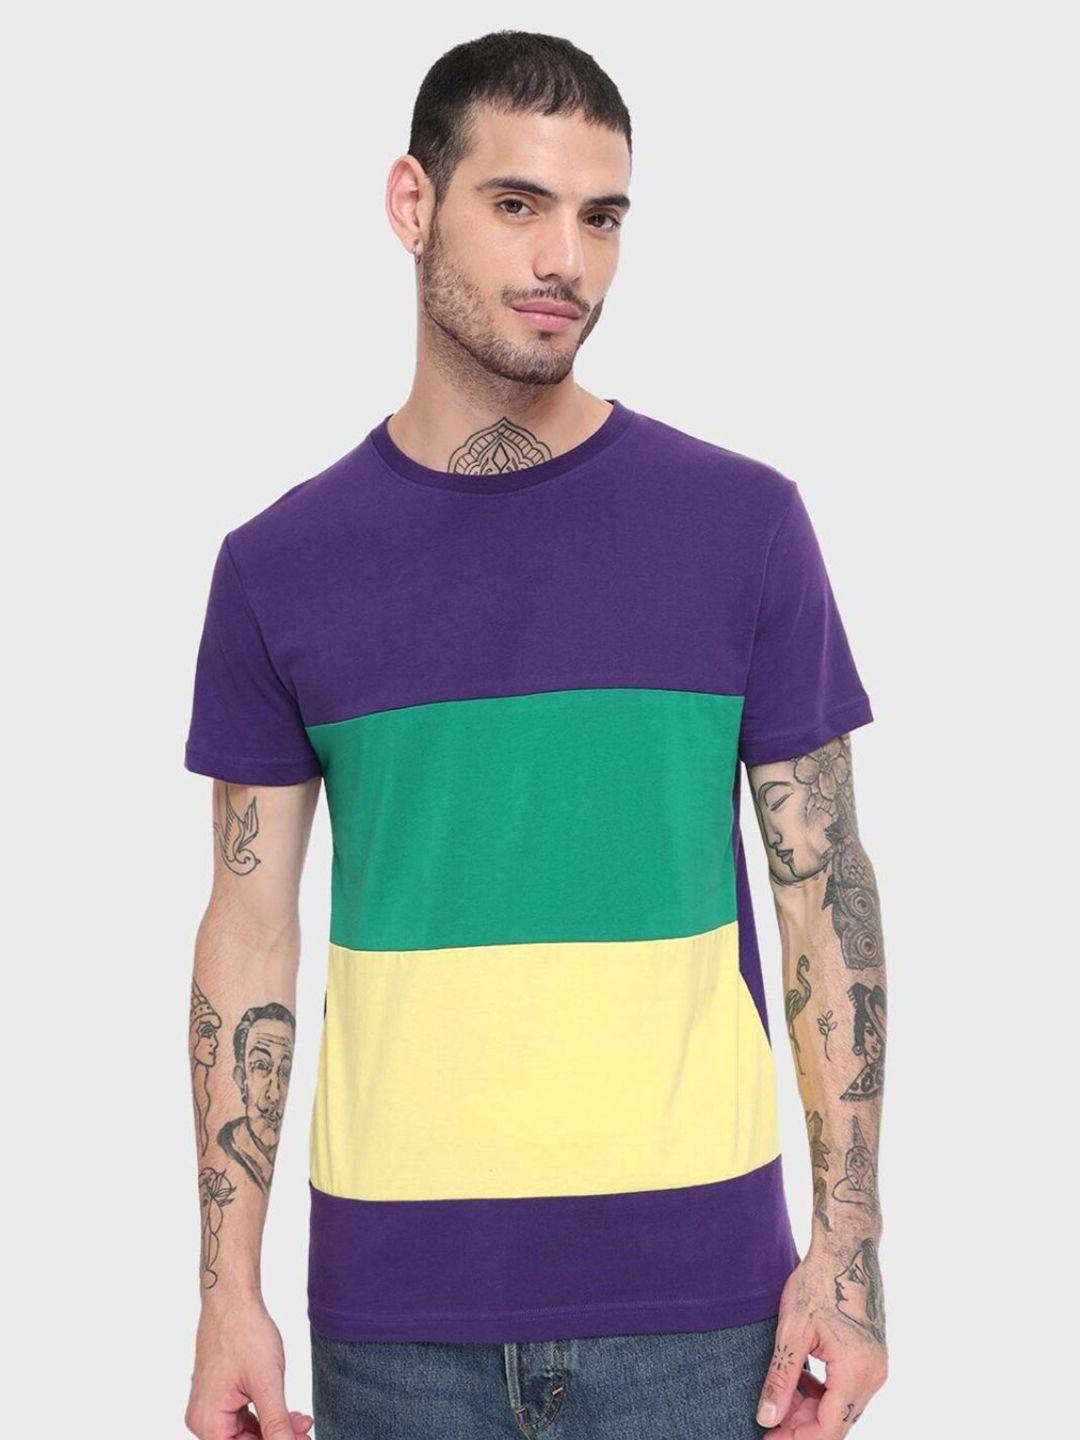 bewakoof-men-purple-colourblocked-t-shirt